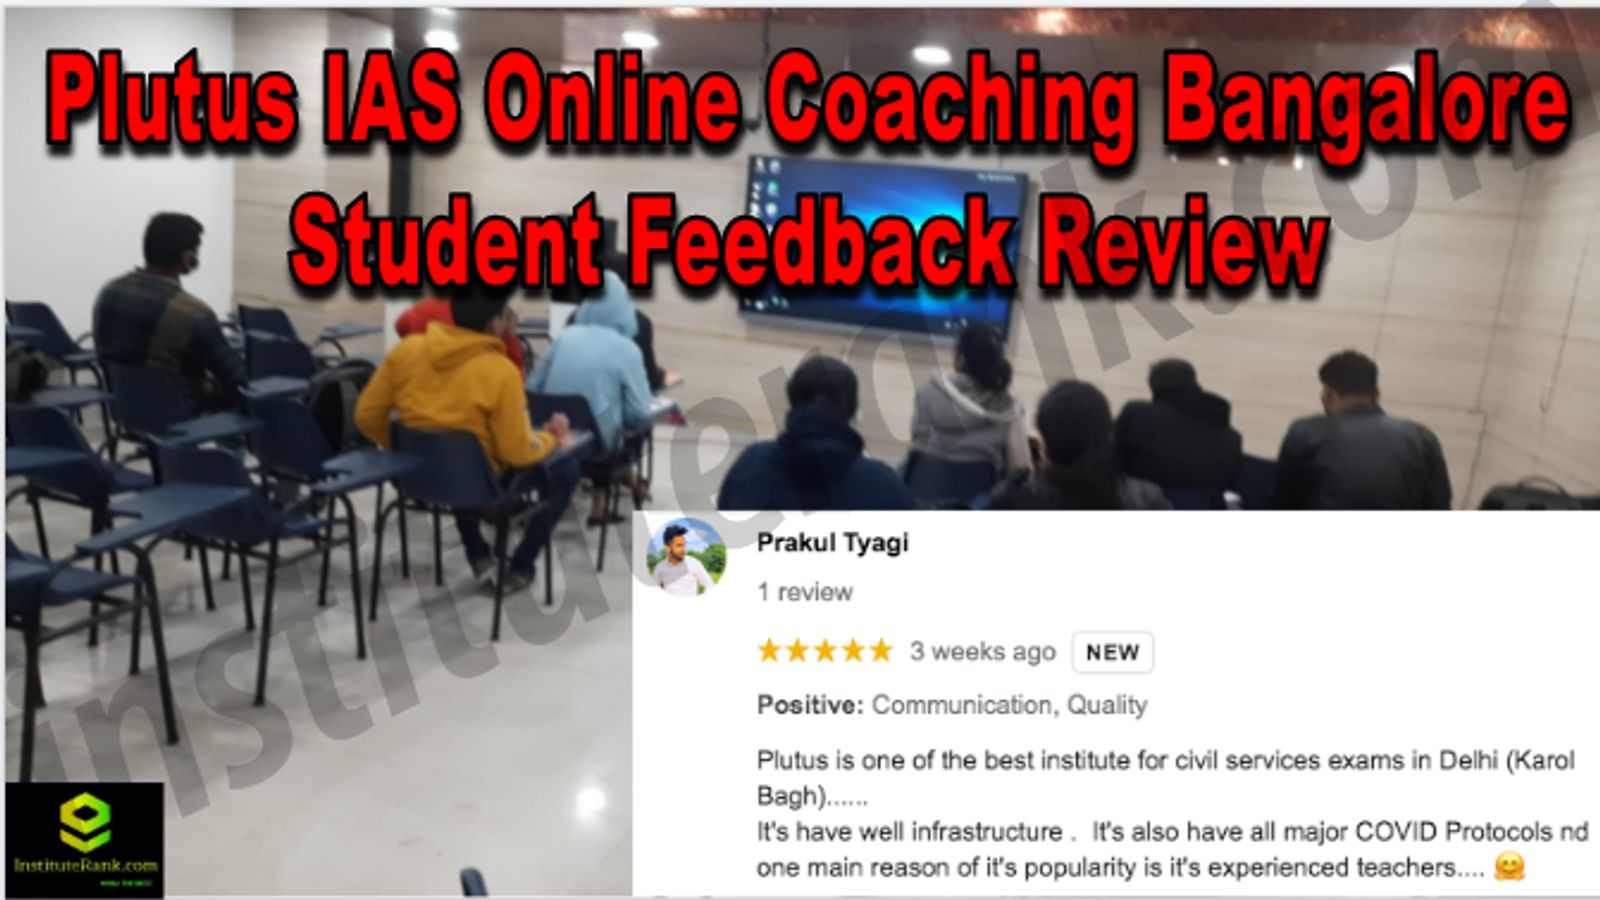 Plutus IAS Online Coaching Bangalore Student Feedback Reviews